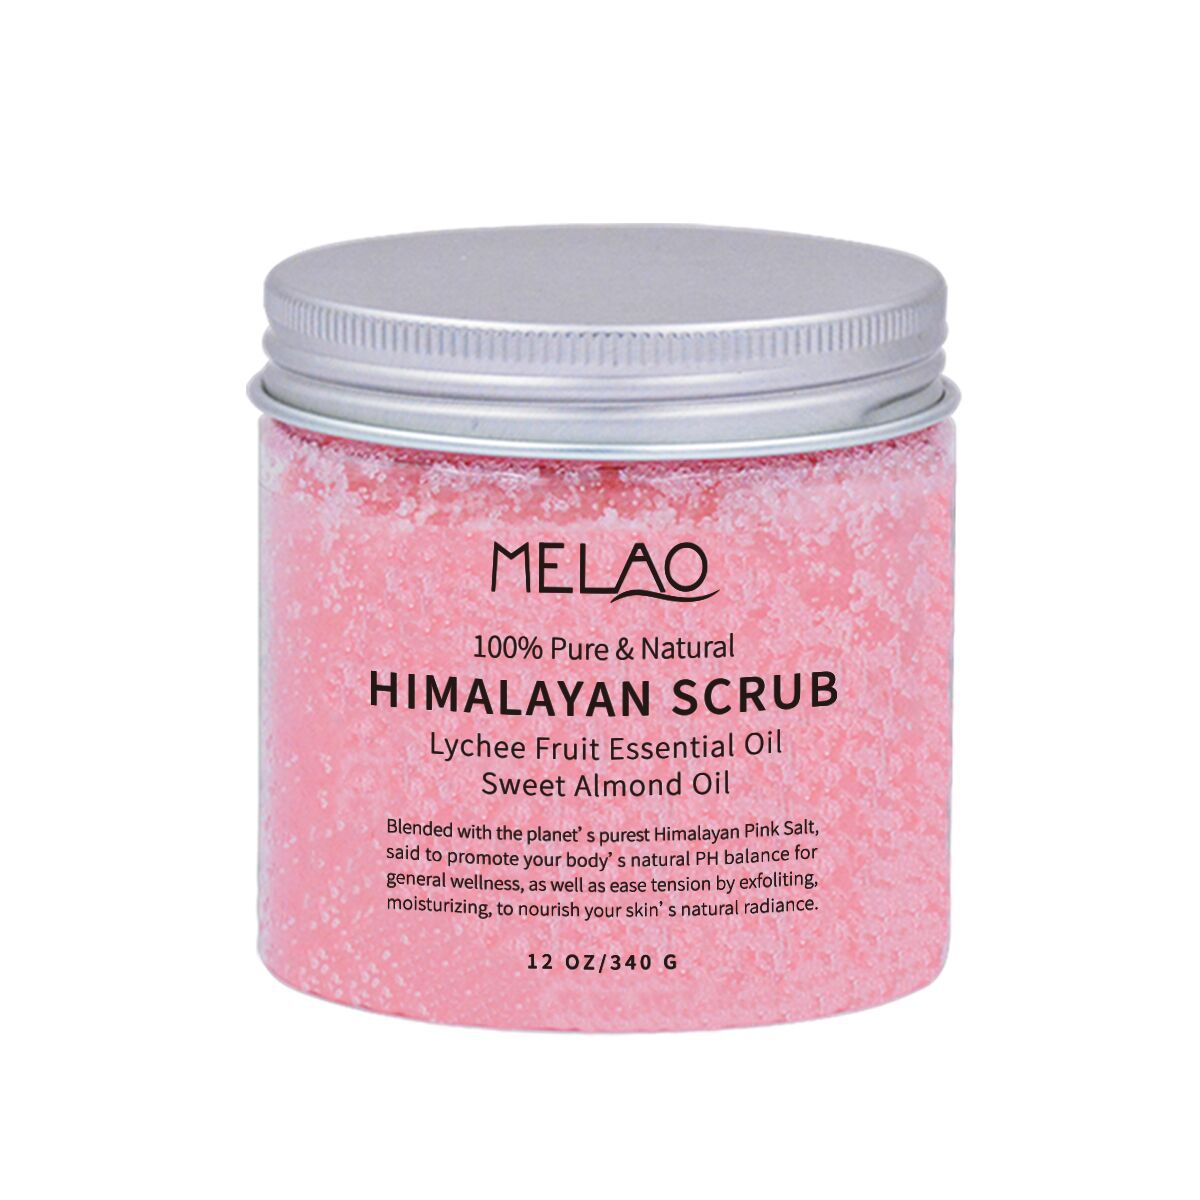 Himalayan Pink Salt Body Scrub